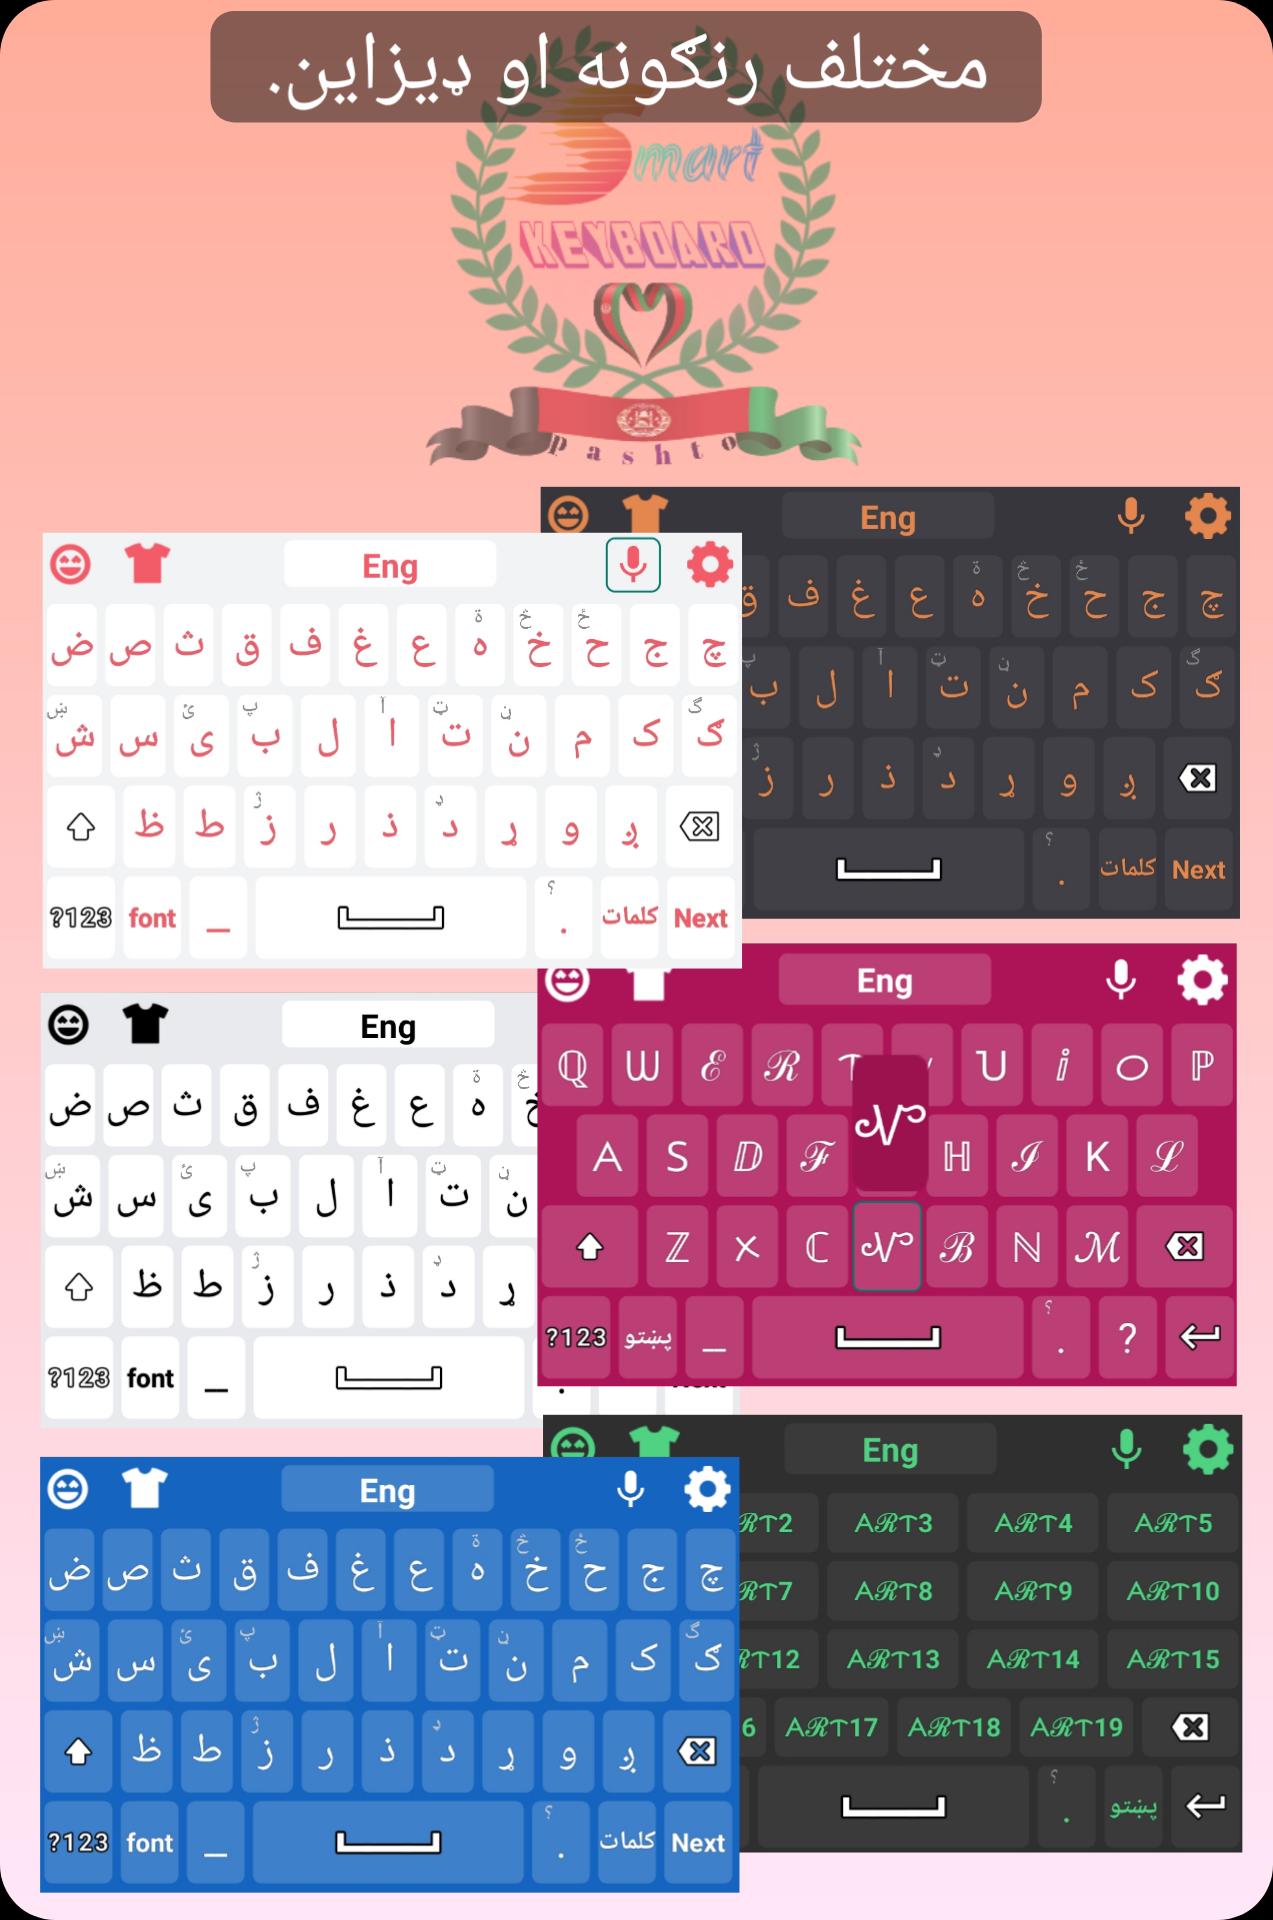 Smart pashto keyboard - Pashto English keyboard for Android - APK Download